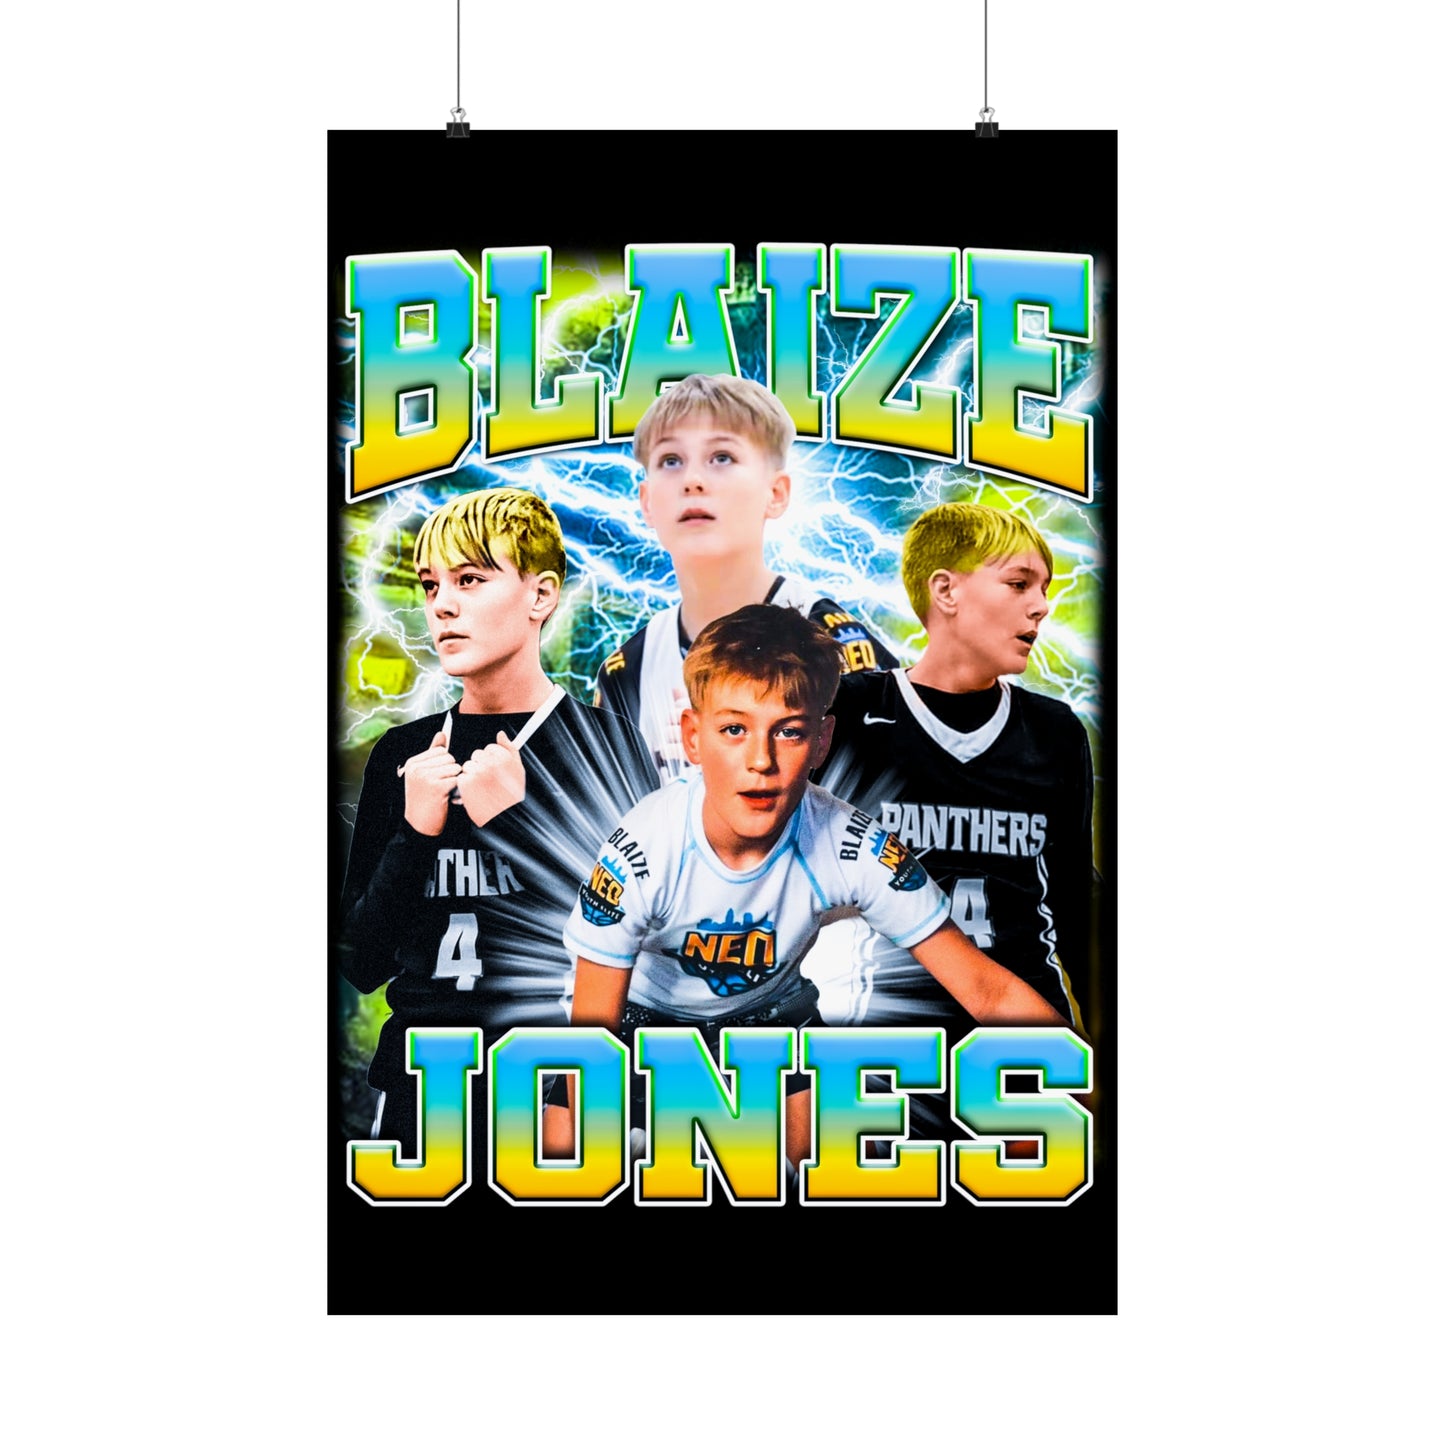 Blaize Jones Poster